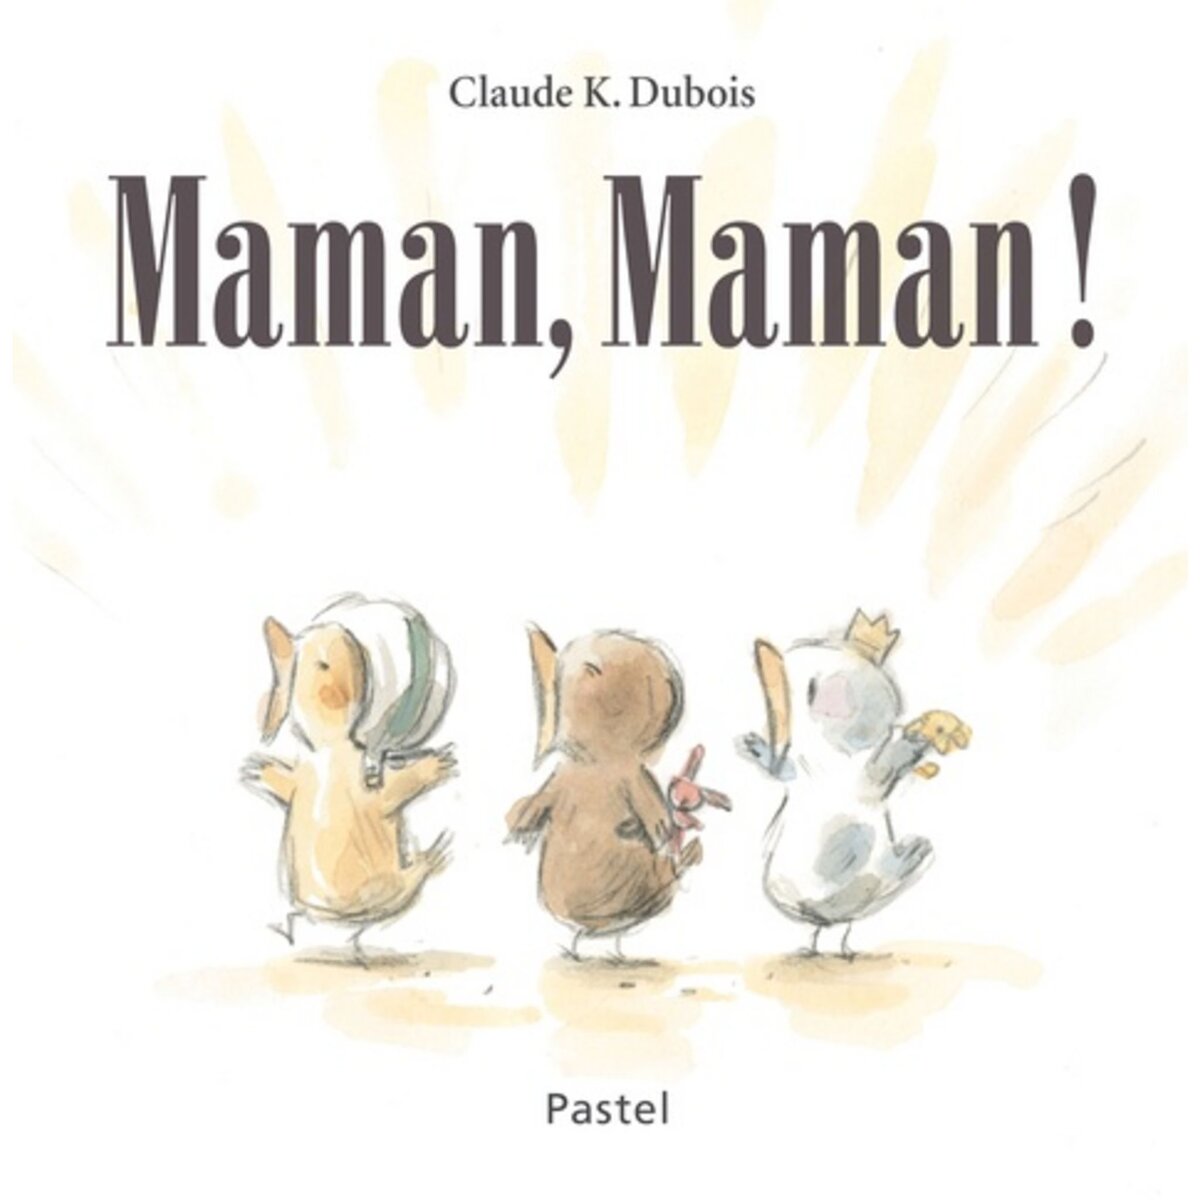  MAMAN, MAMAN !, Dubois Claude K.